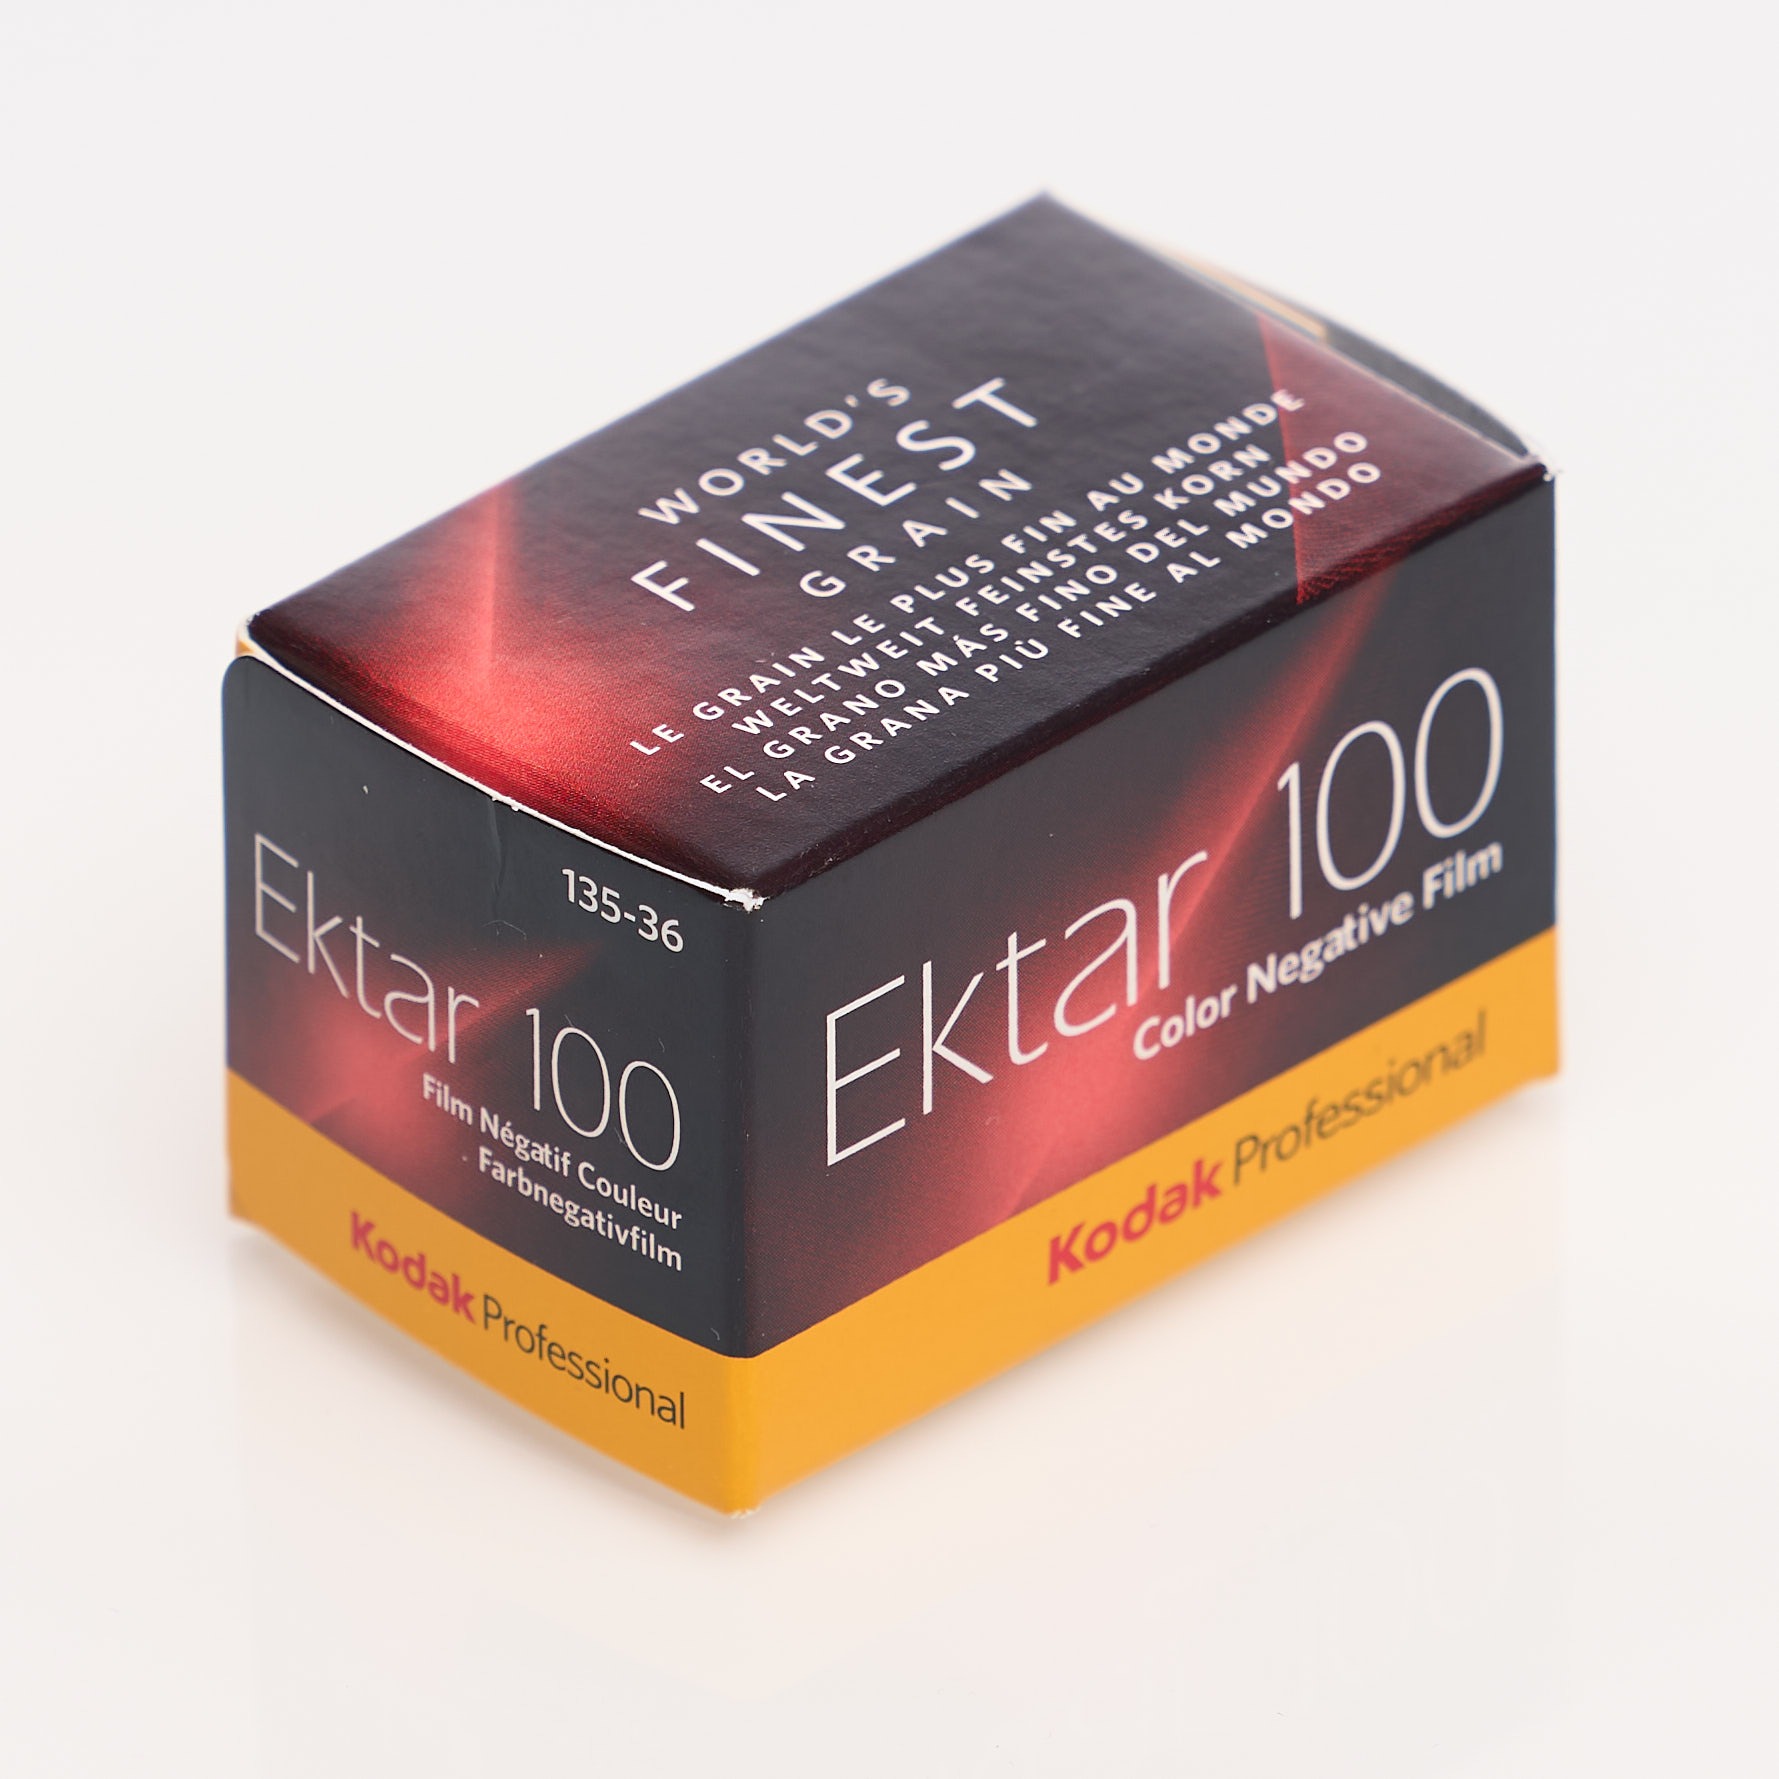 Analogfilm Kodak Ektar 100. Fotostudio Fotokarlsruhe.